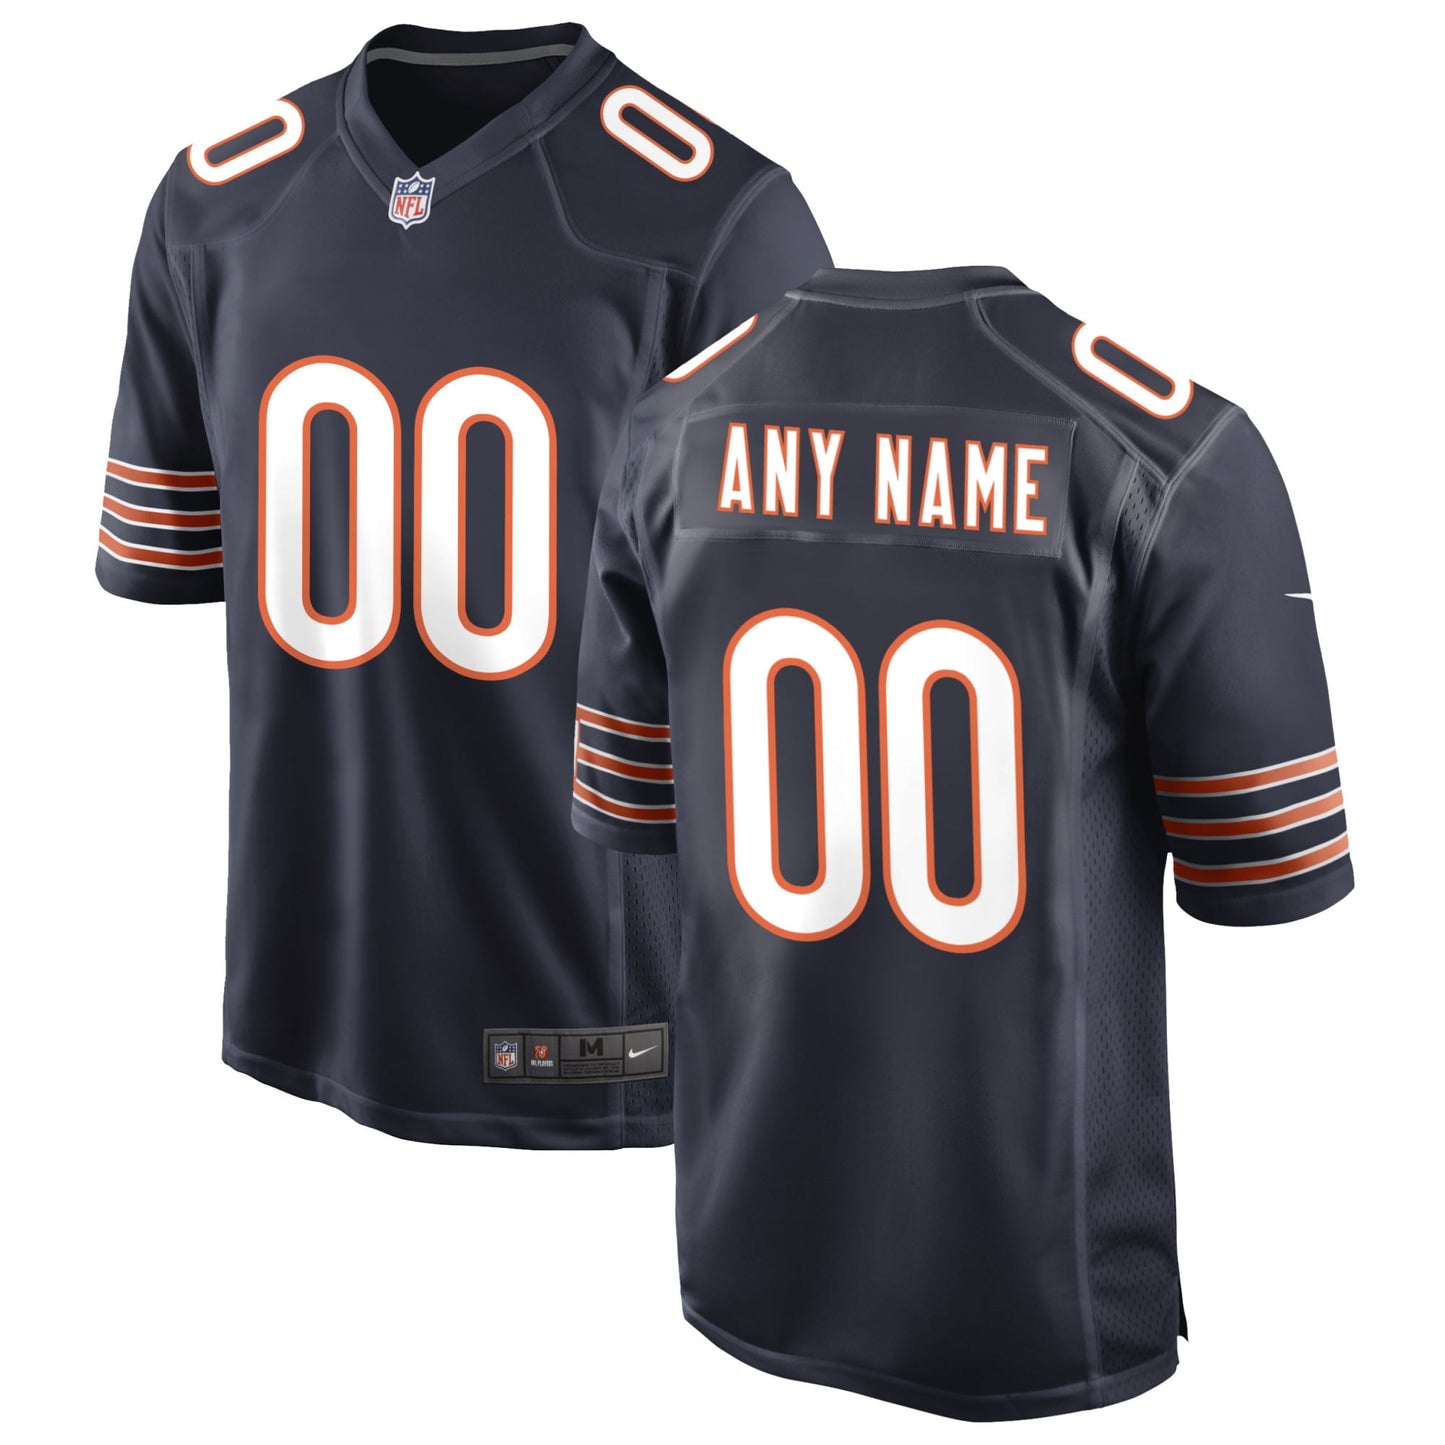 Chicago Bears Nike Custom Game Jersey - Navy